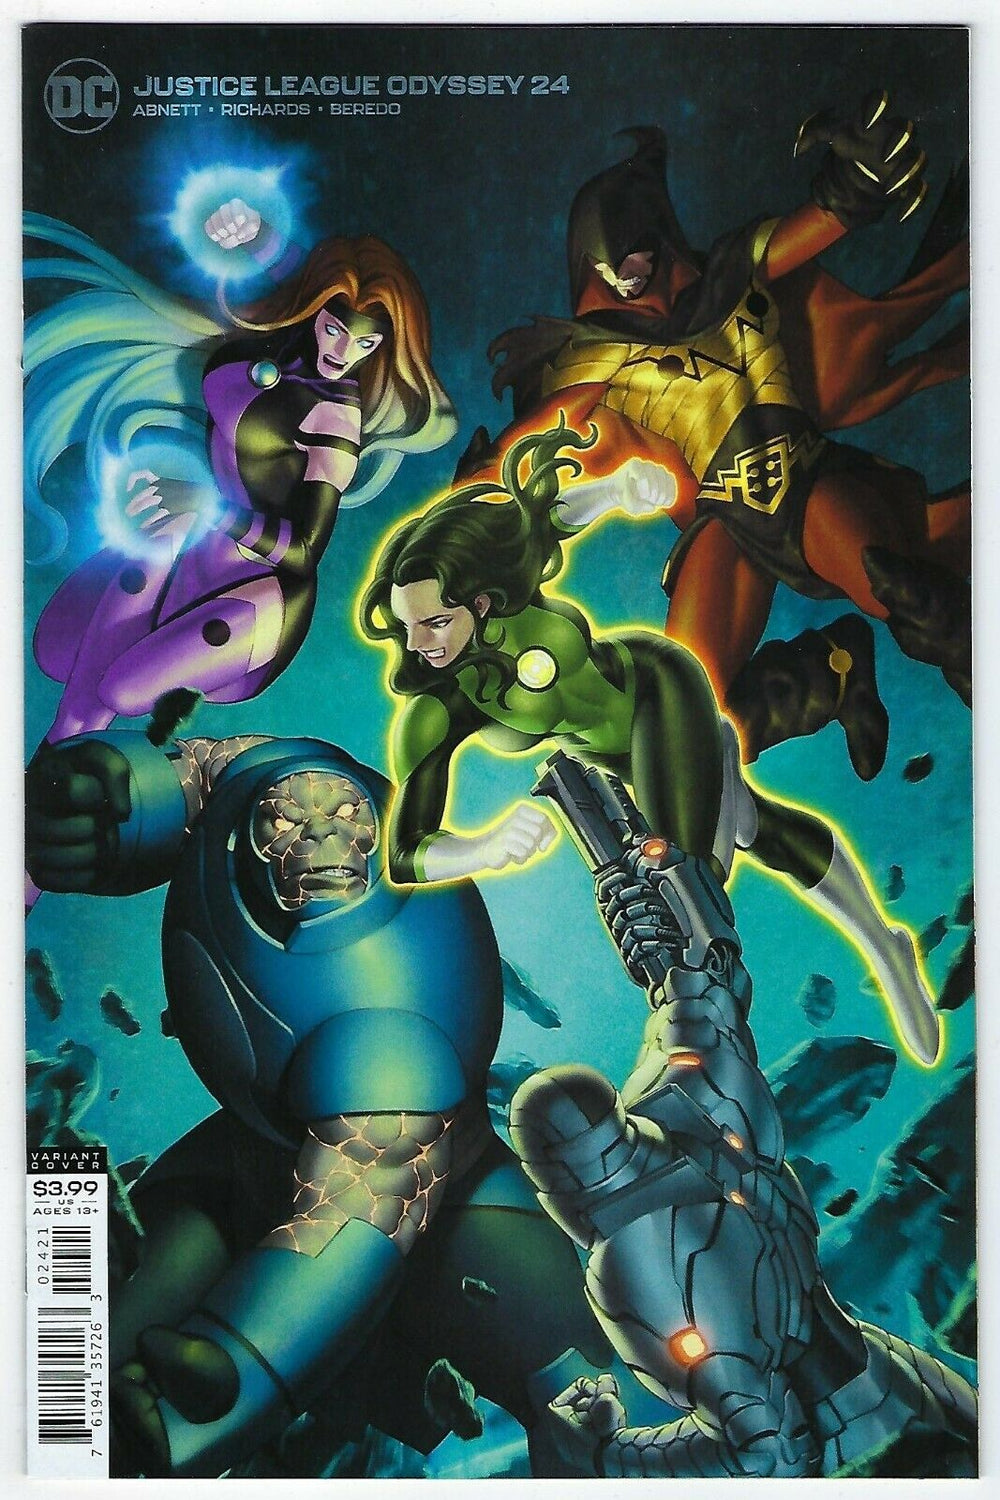 JUSTICE LEAGUE ODYSSEY # 24 Cover B Skan - Mutant Beaver Comics